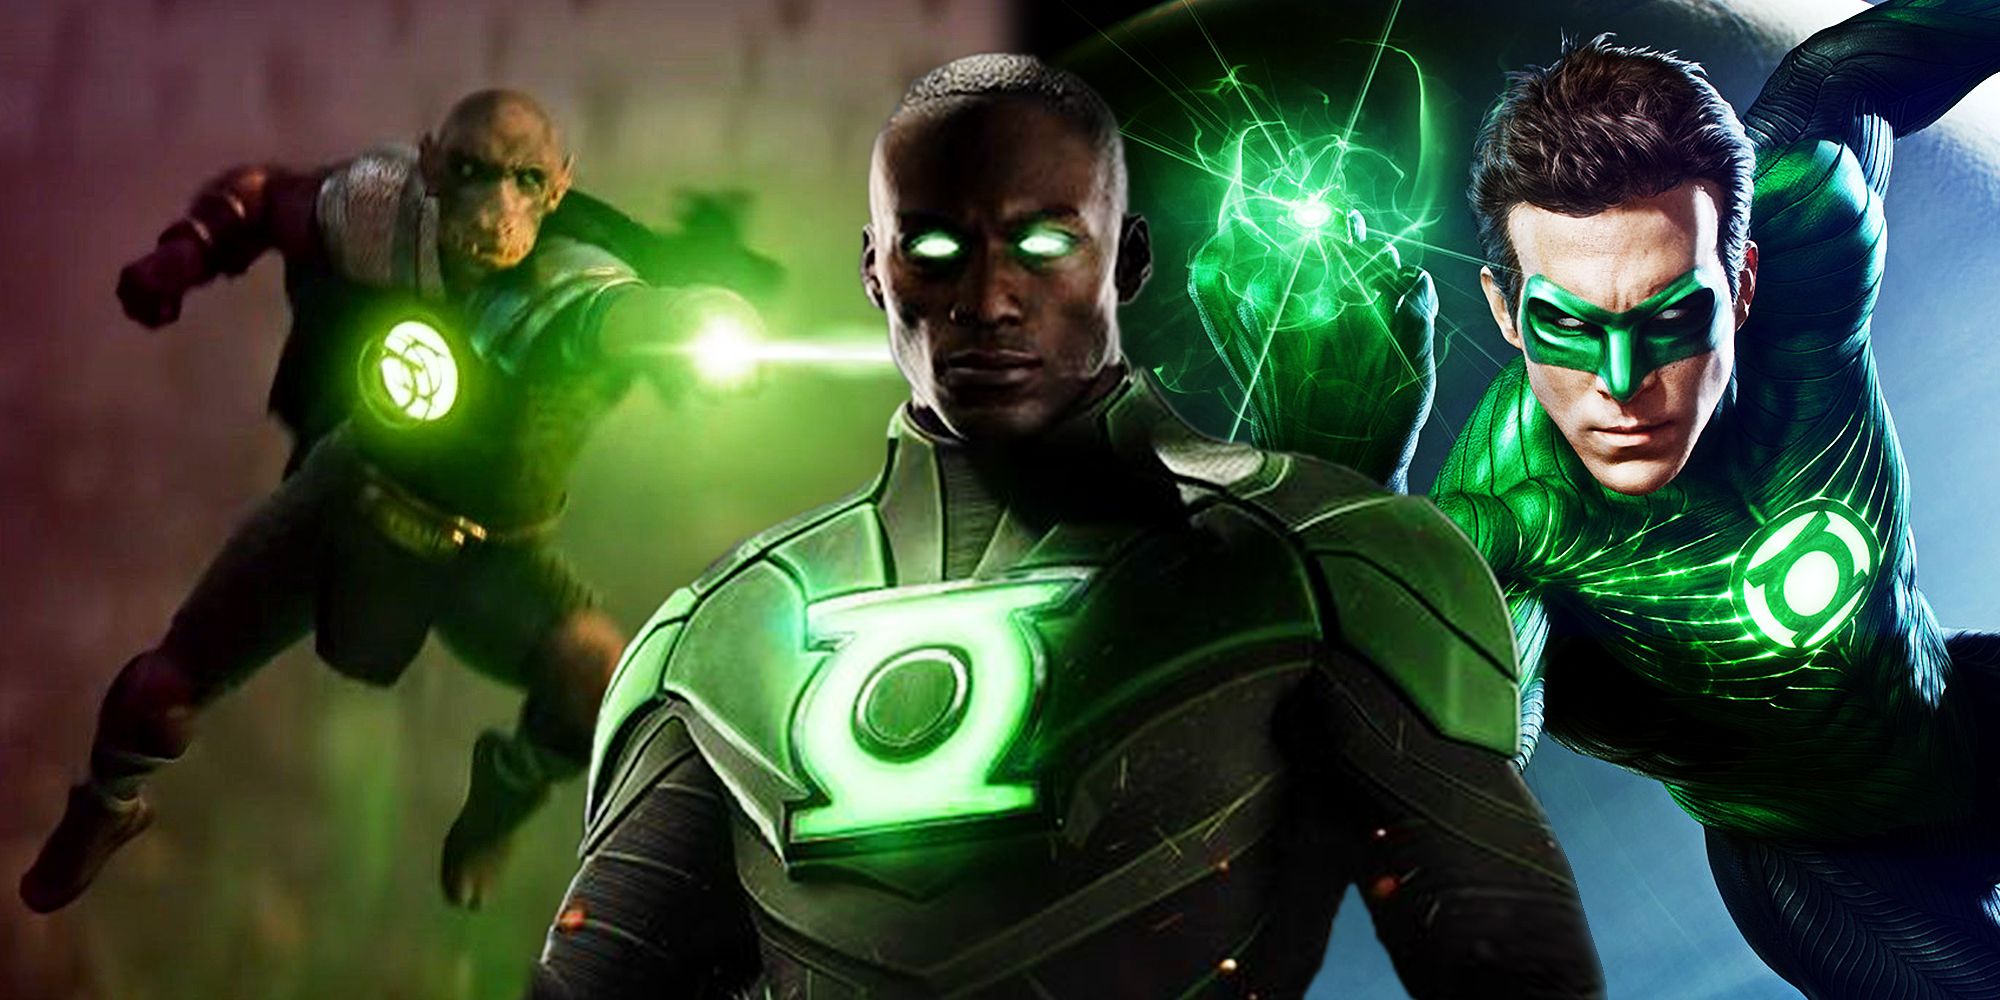 Green Lantern Yalan Gur in The Justice League Snyder Cut, John Stewart, and Hal Jordan